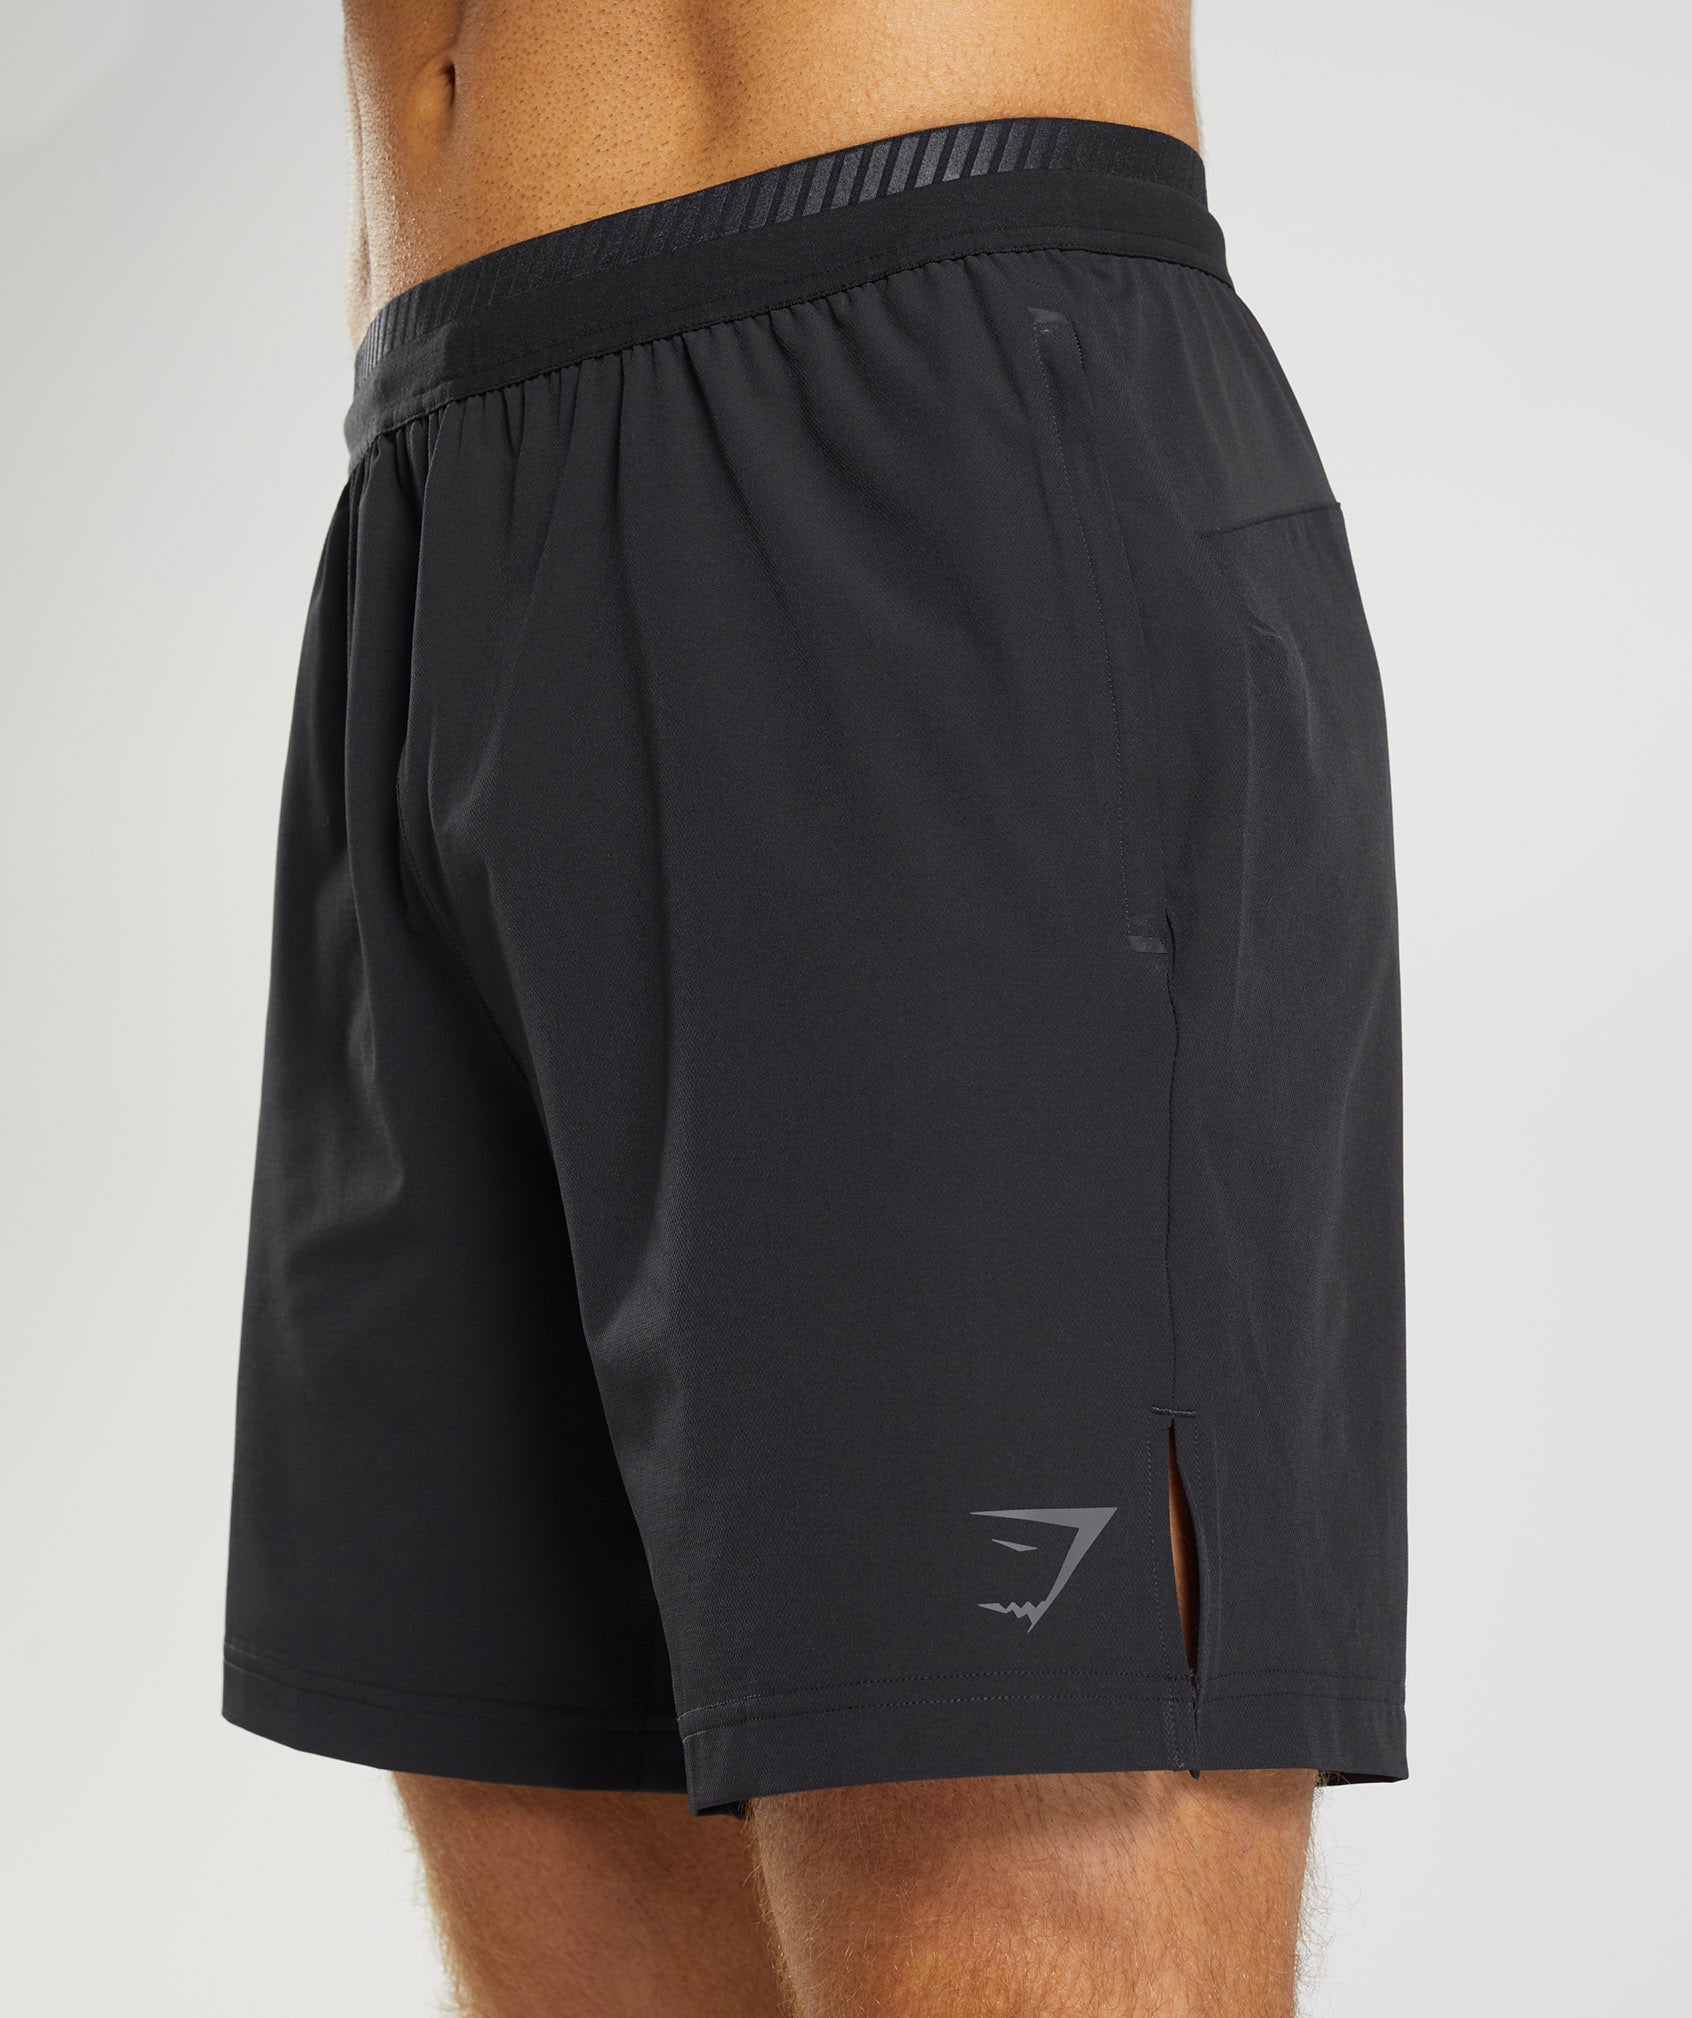 Apex 7" Hybrid Shorts in Black